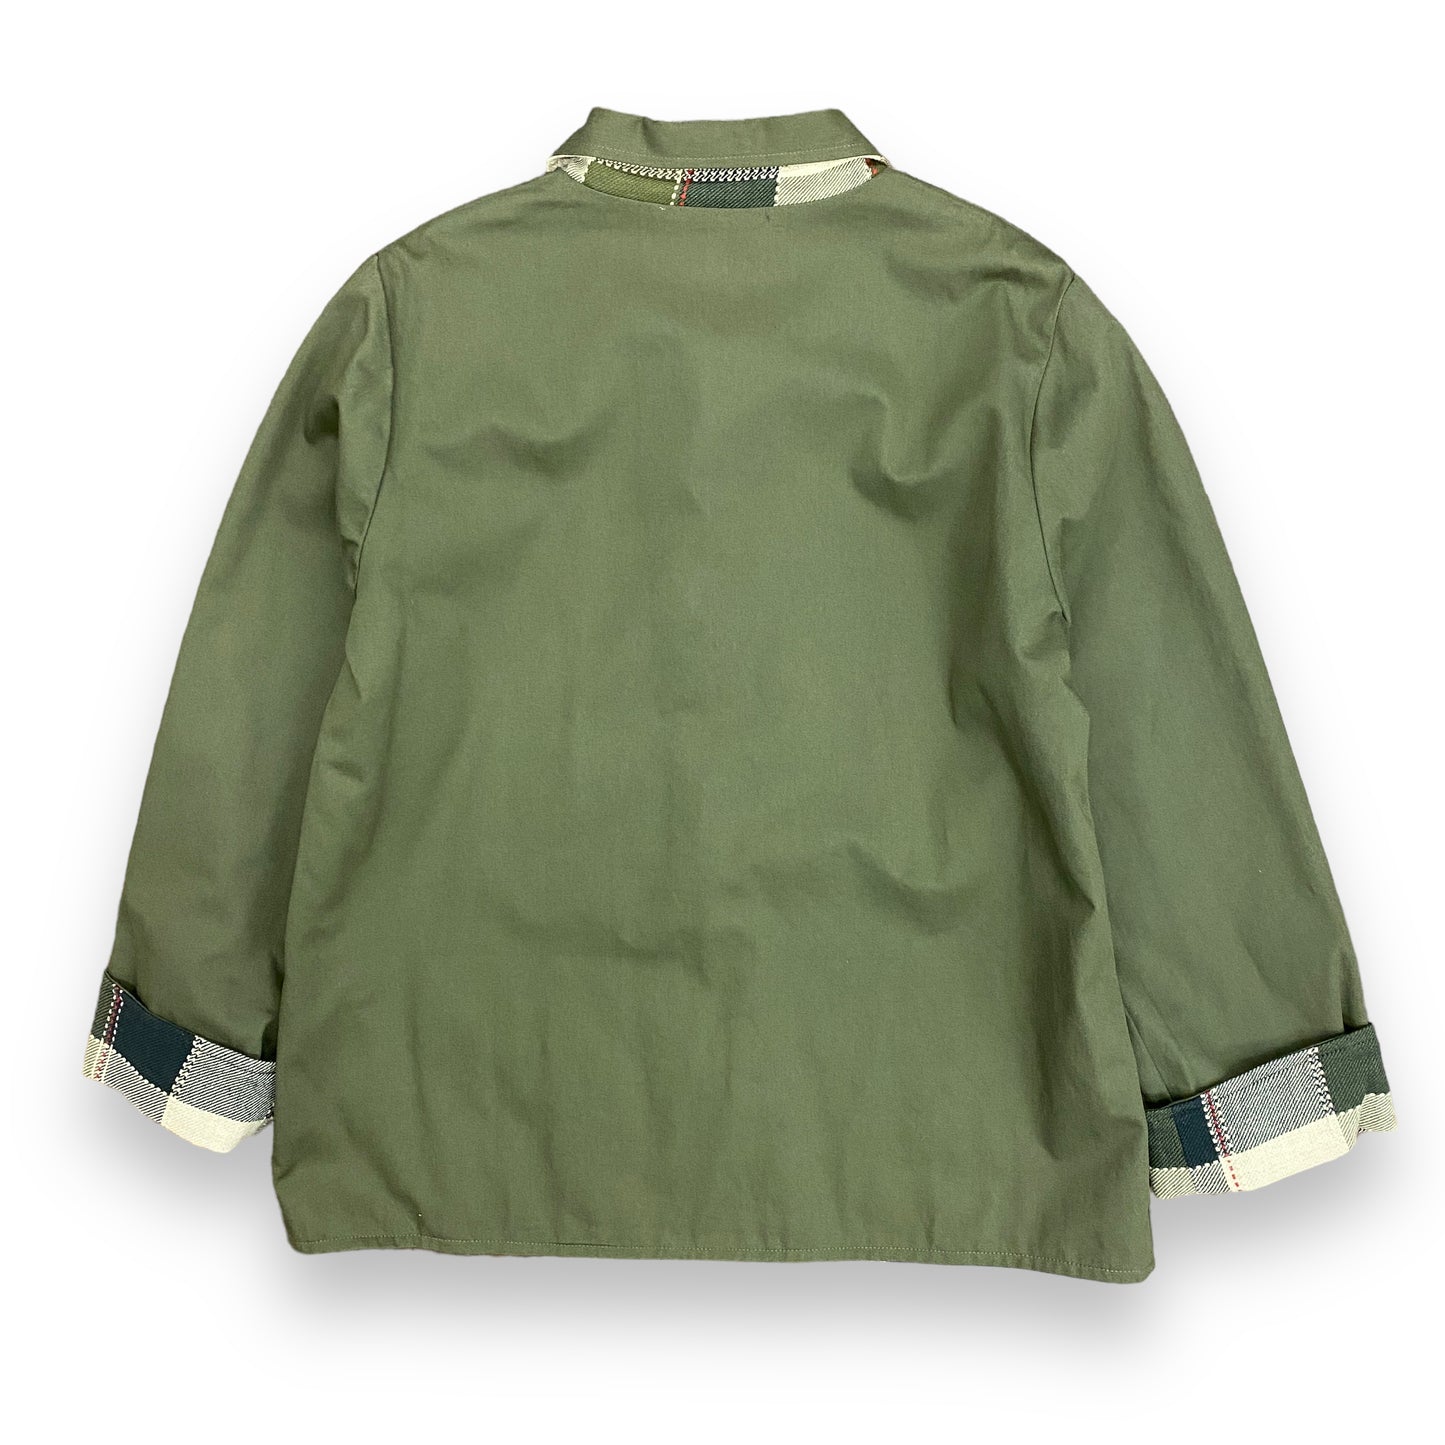 Vintage Green & Plaid Reversible Button Up Jacket - Size Medium